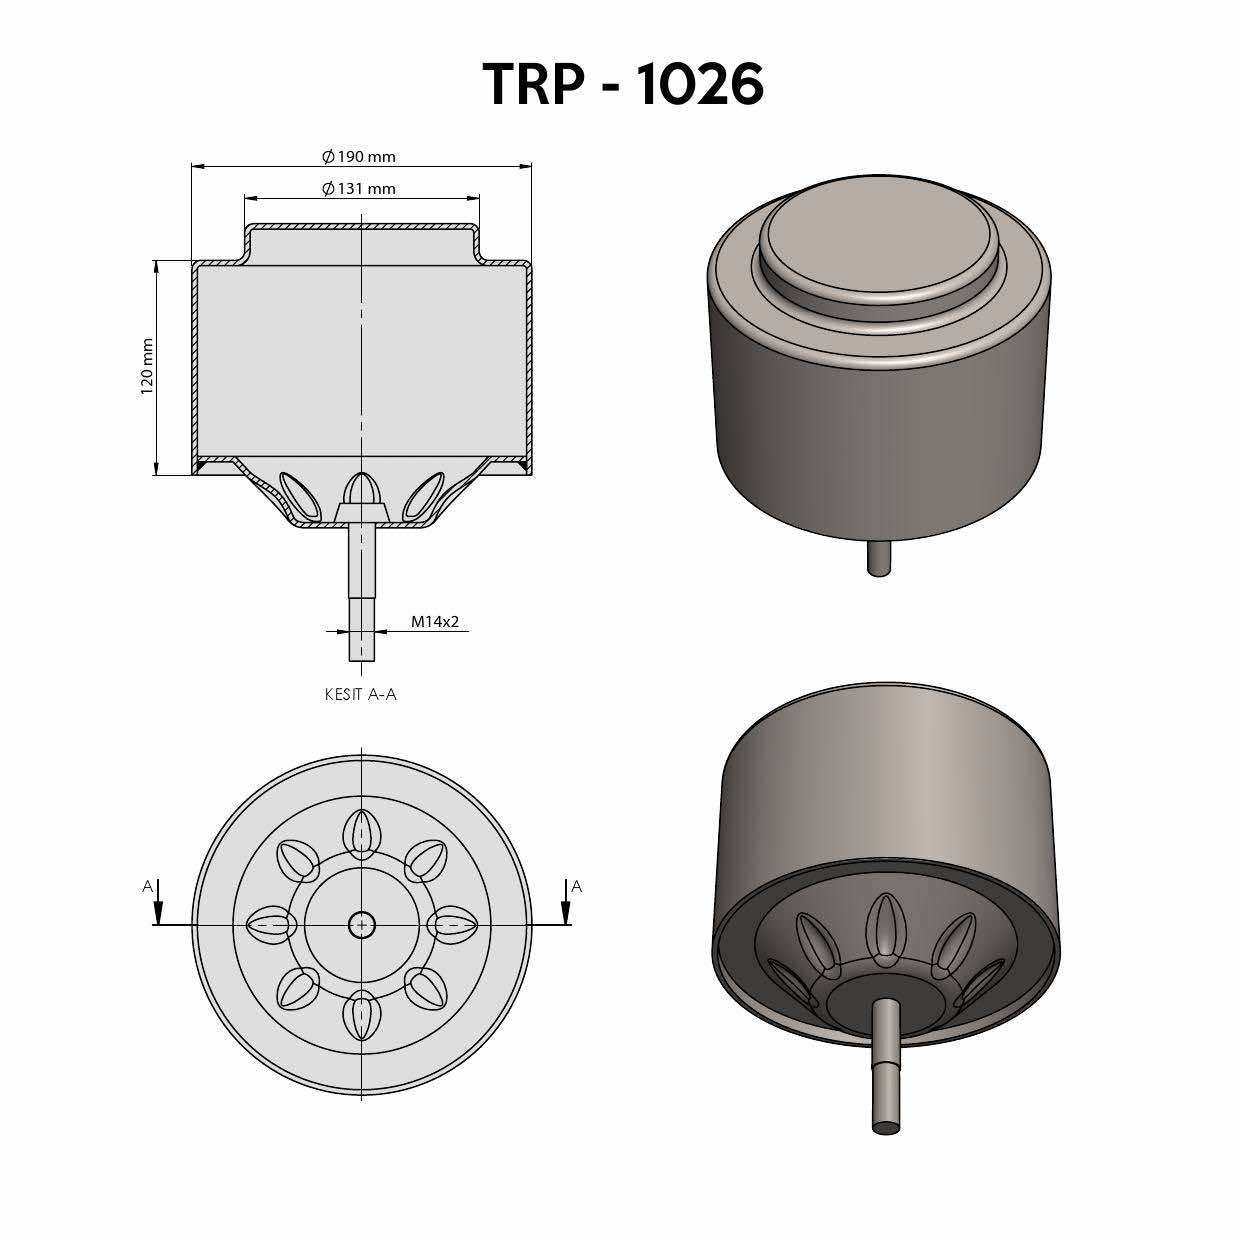 TRP-1026